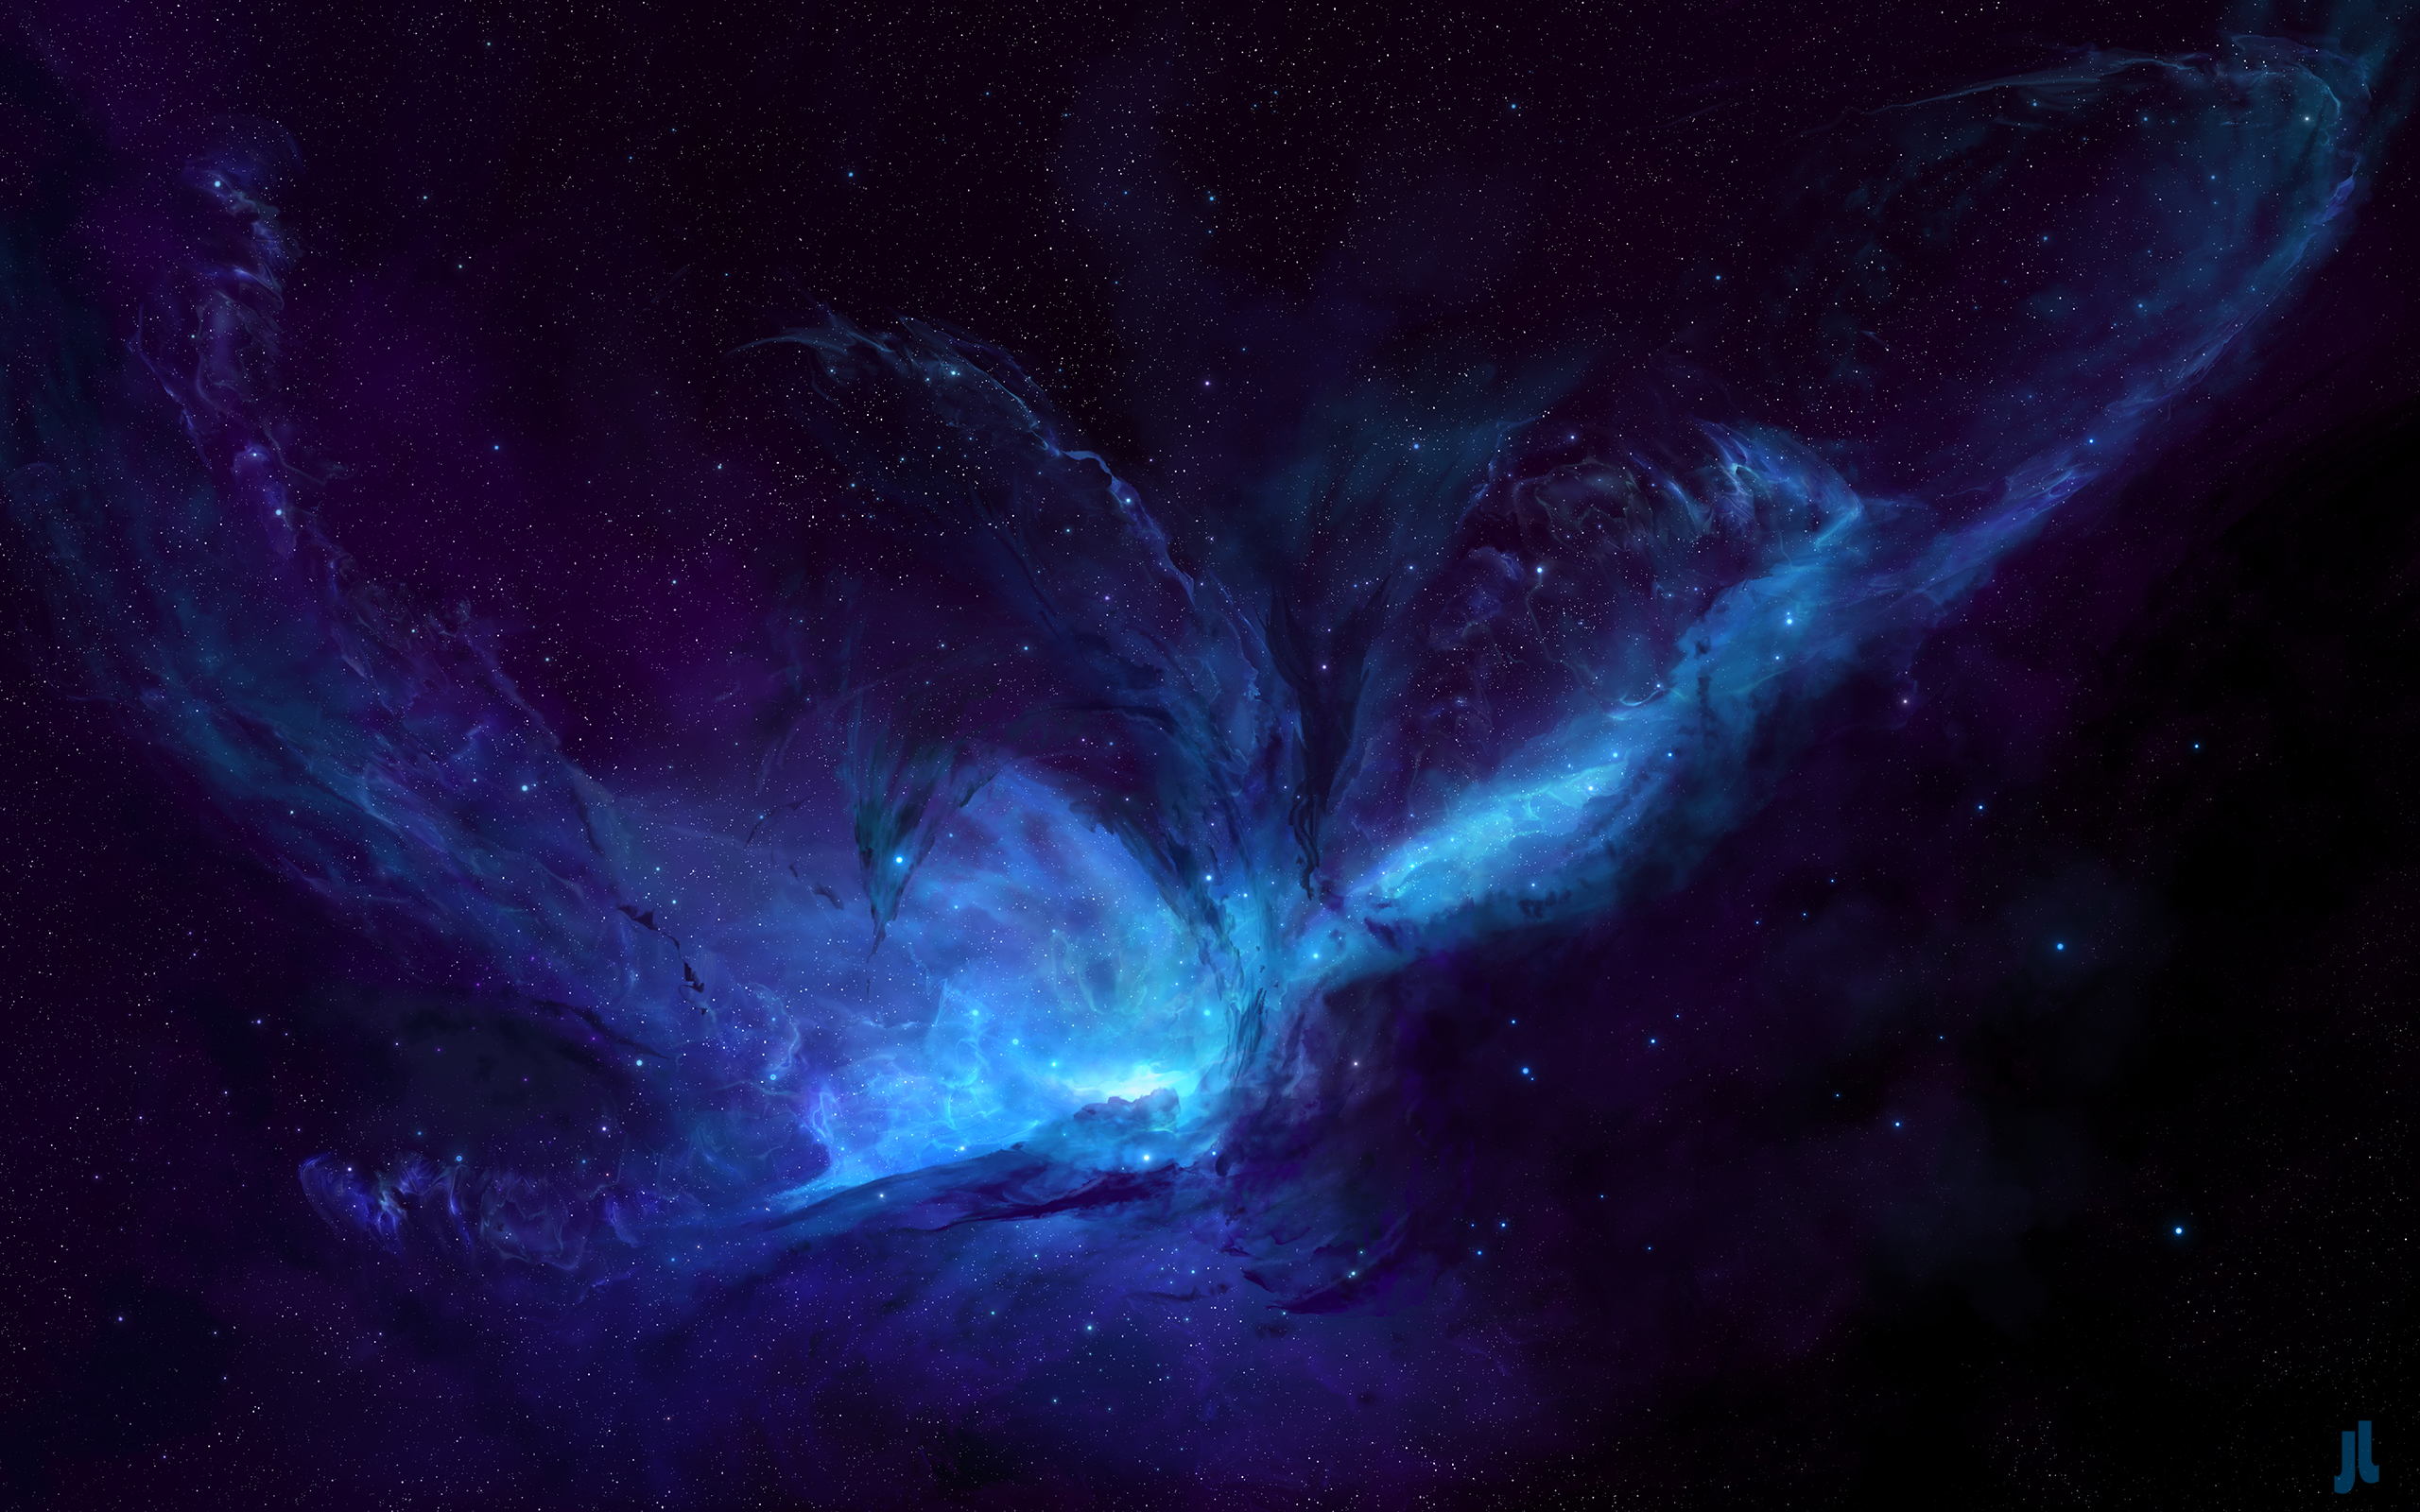 Interstellar Nebula2716816664 - Interstellar Nebula - Spacescape, Nebula, Interstellar